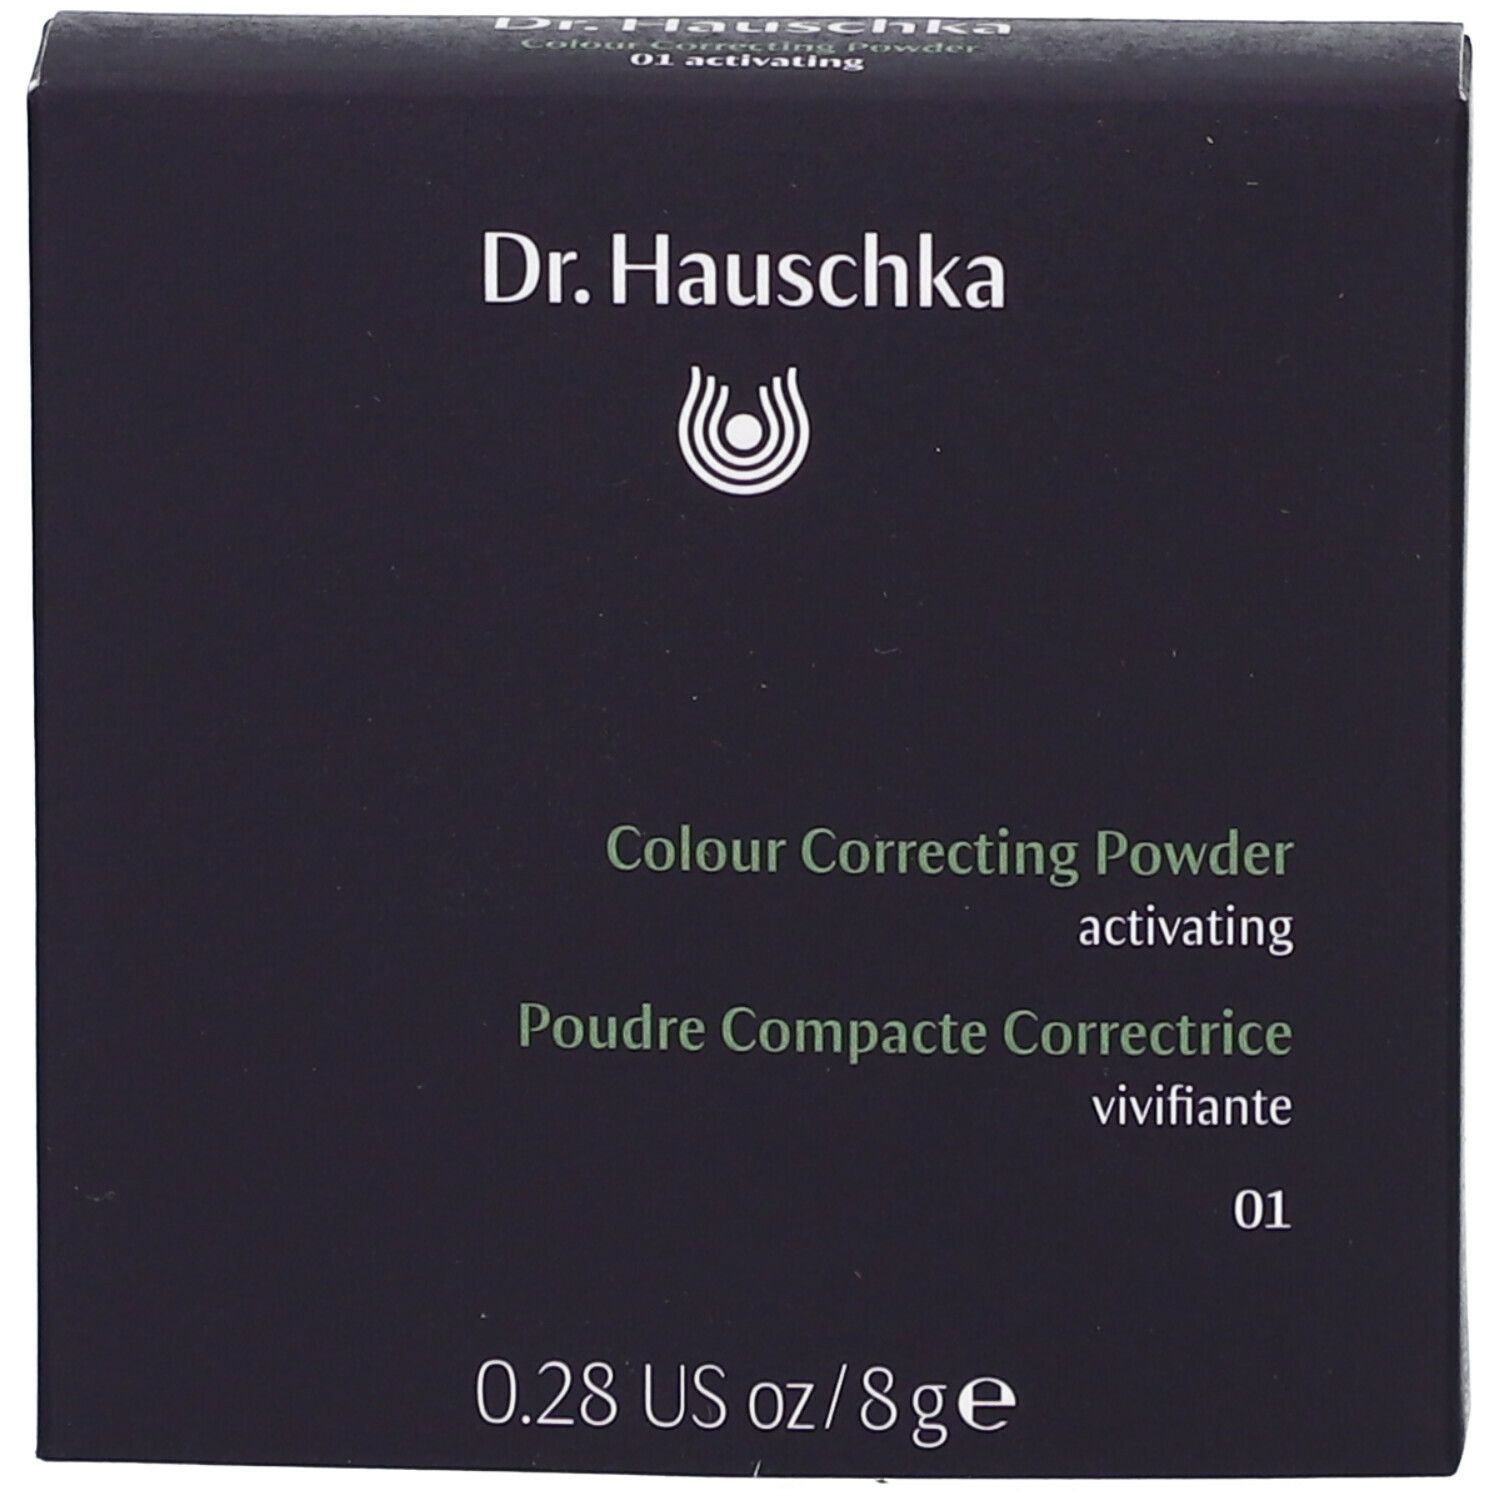 Dr. Hauschka Poudre Compacte Correctrice